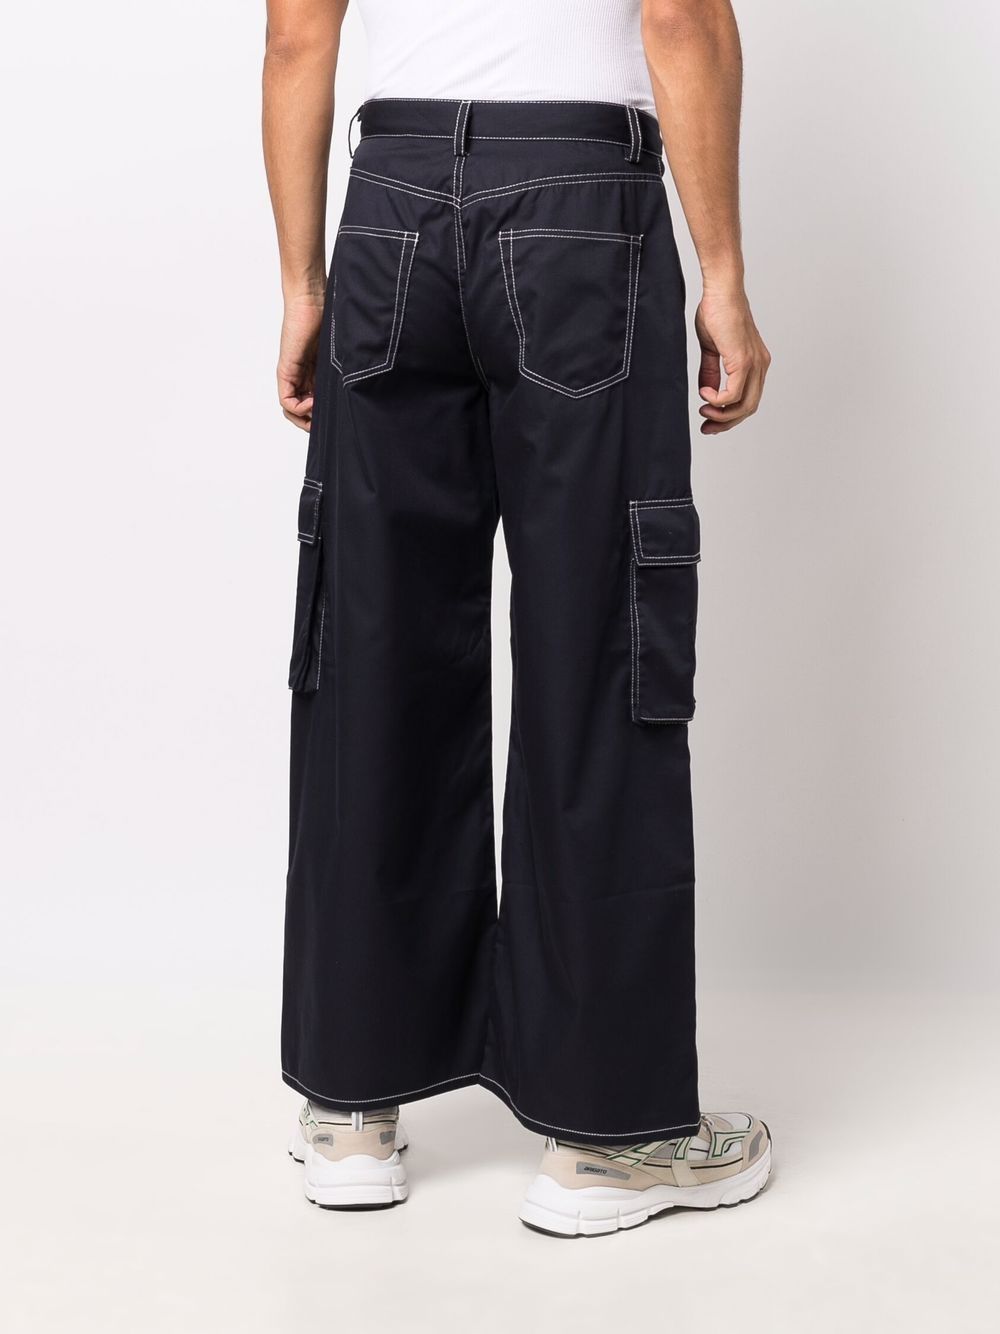 фото Sunnei широкие джинсы с карманами карго